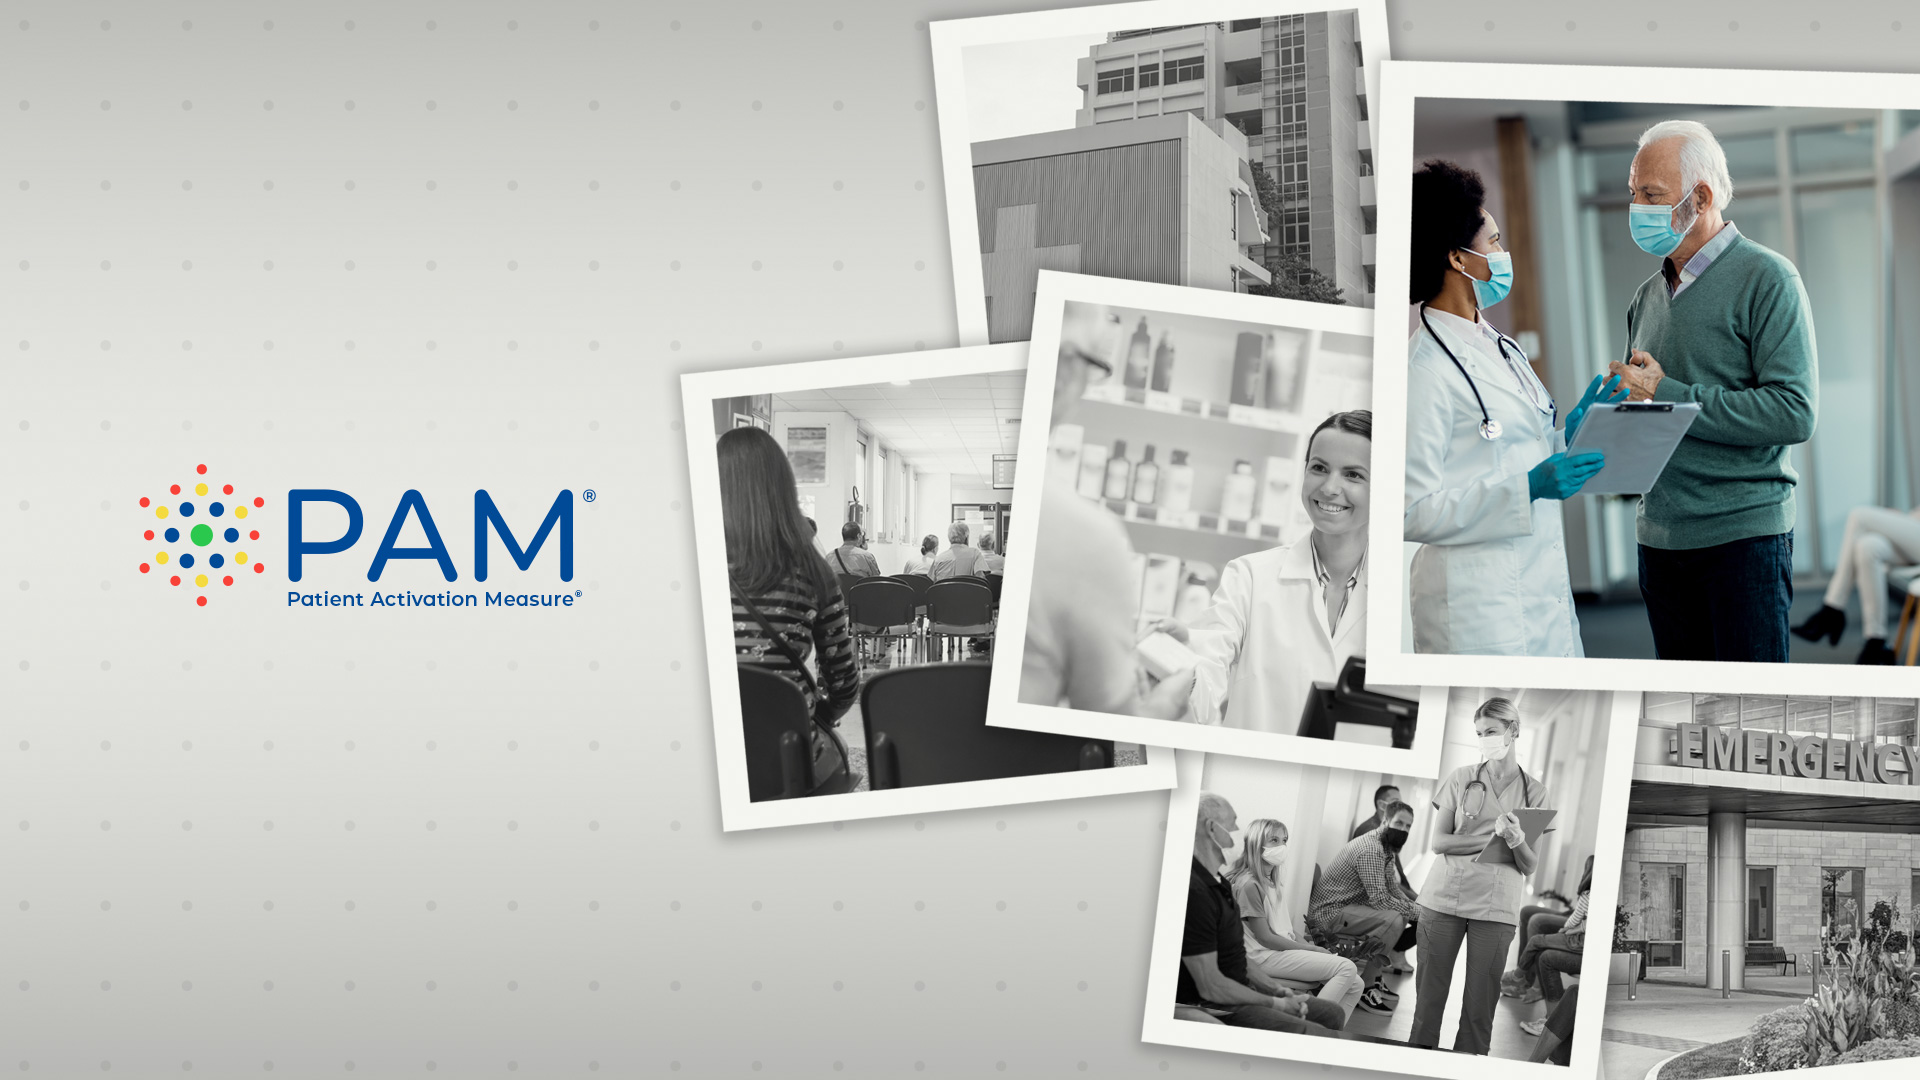 Phreesia Insignia Health Company Website homepage Header image with PAM logo